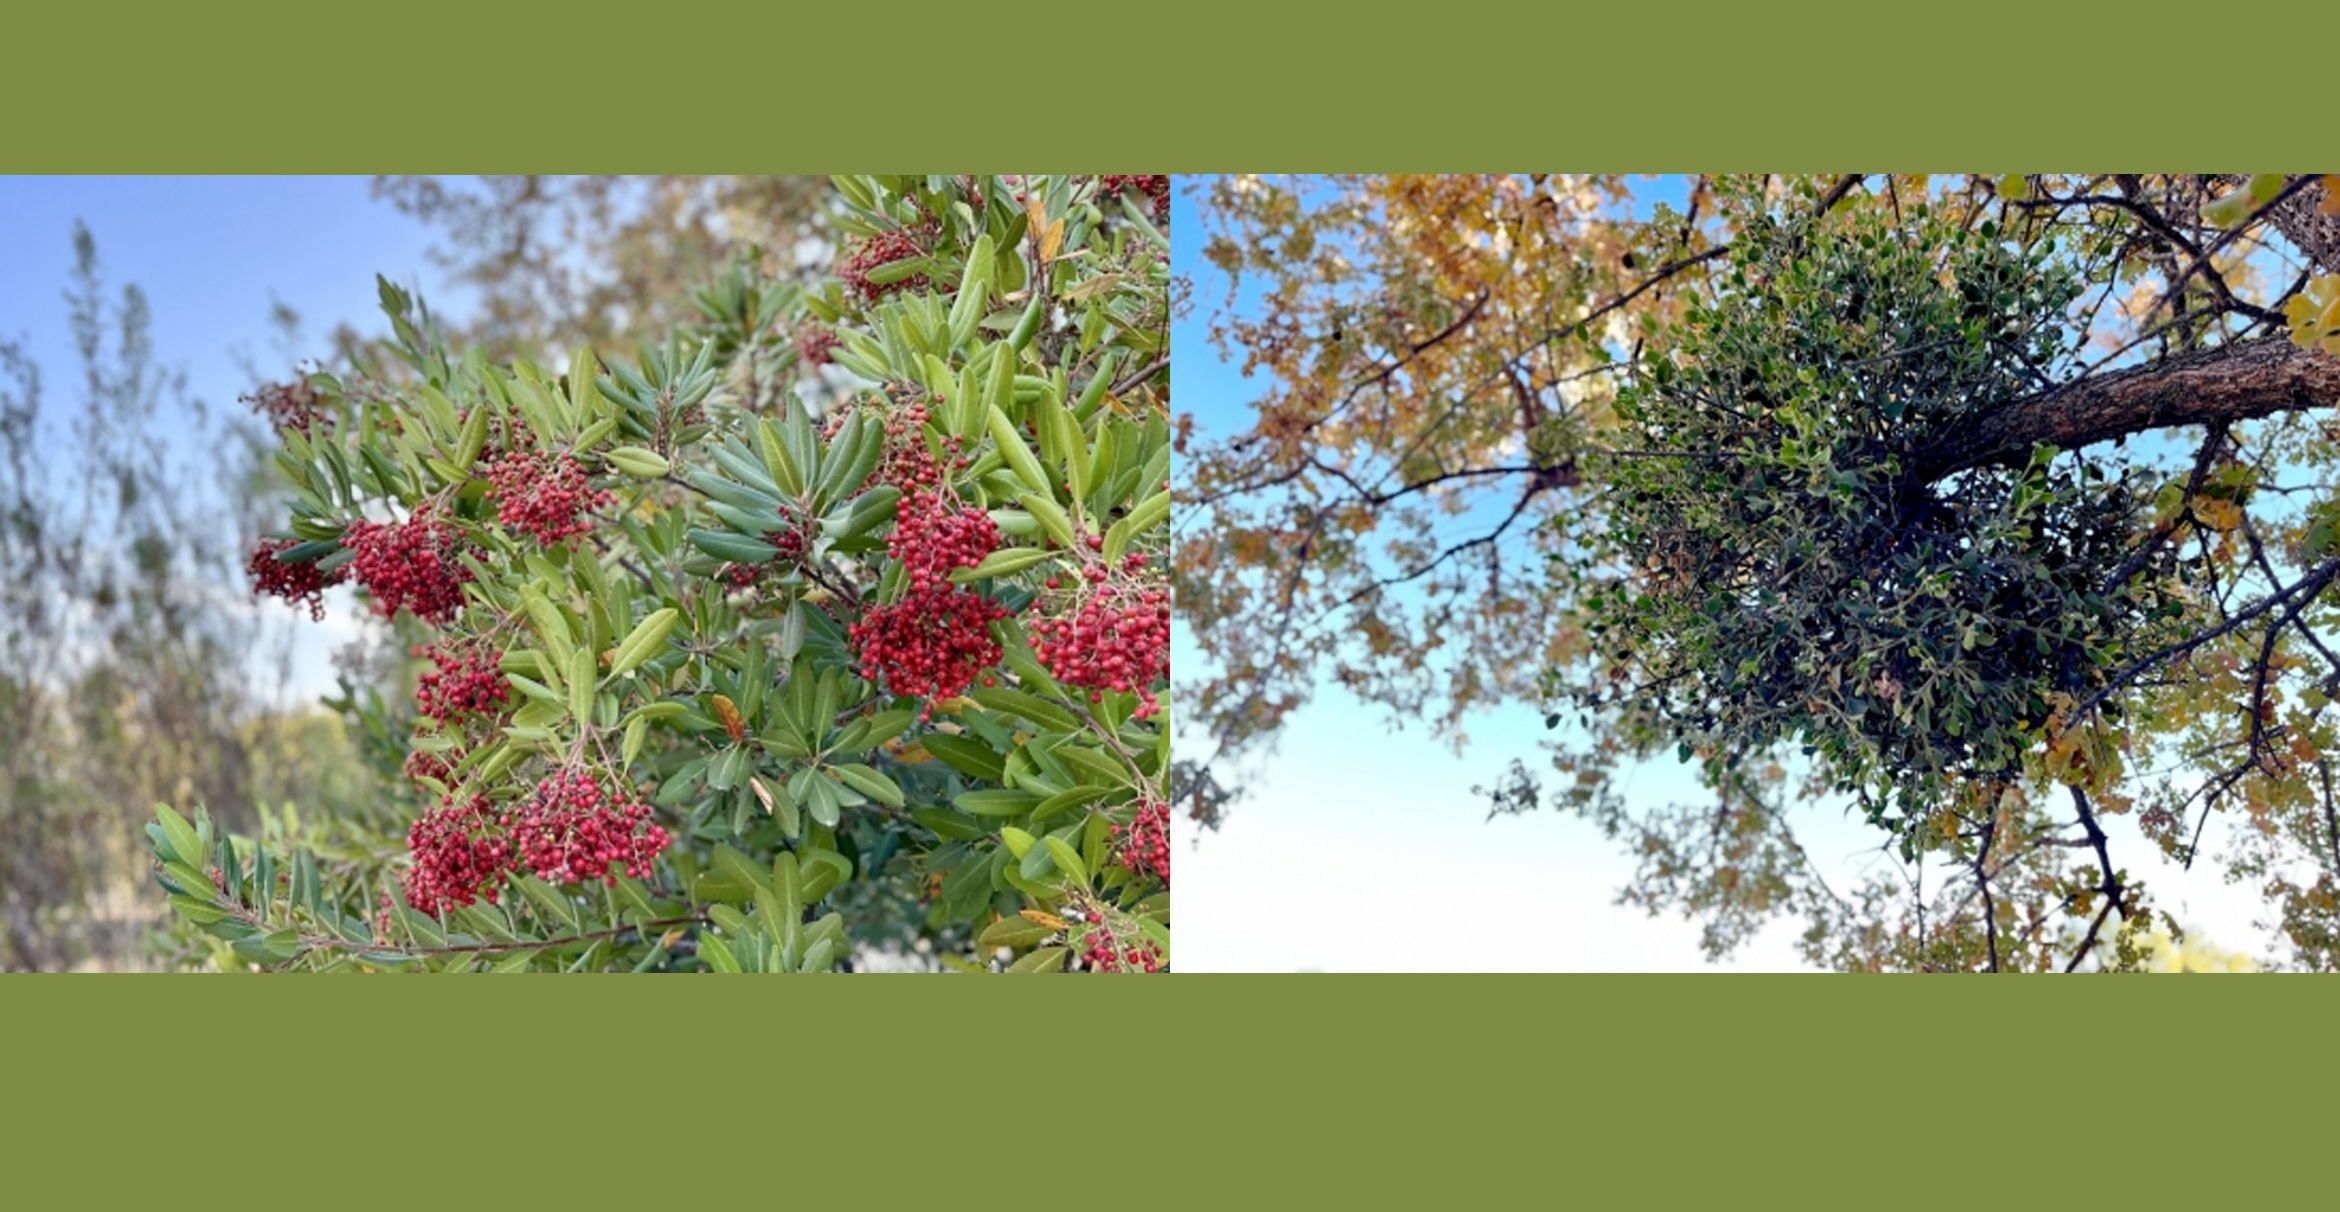 Toyon berry and Mistletoe